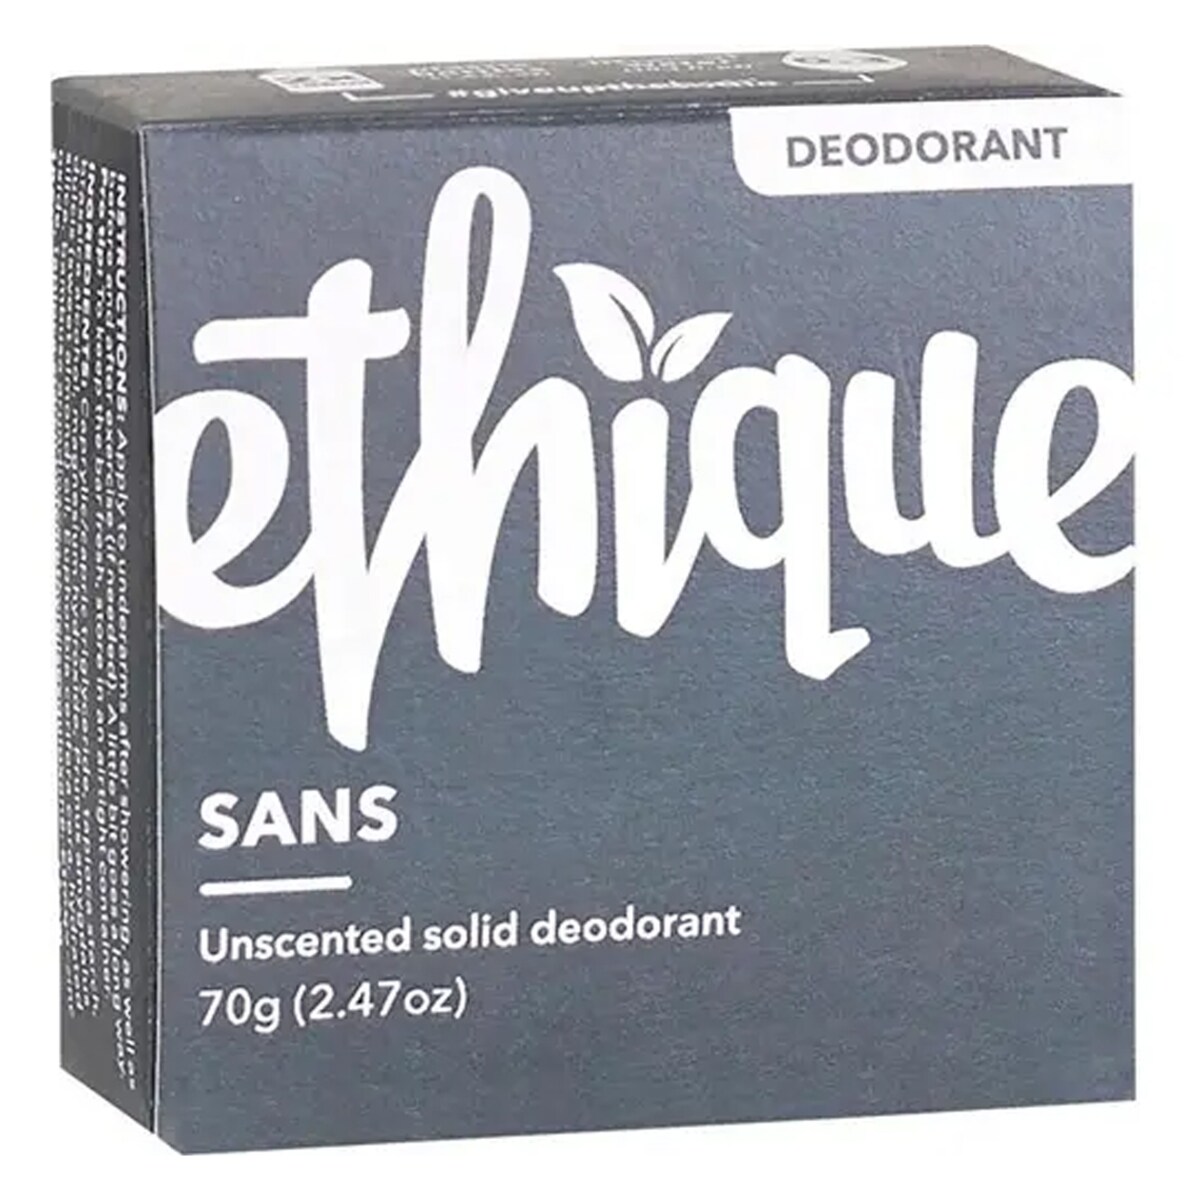 ETHIQUE Solid Deodorant Bar Sans - Unscented 70g